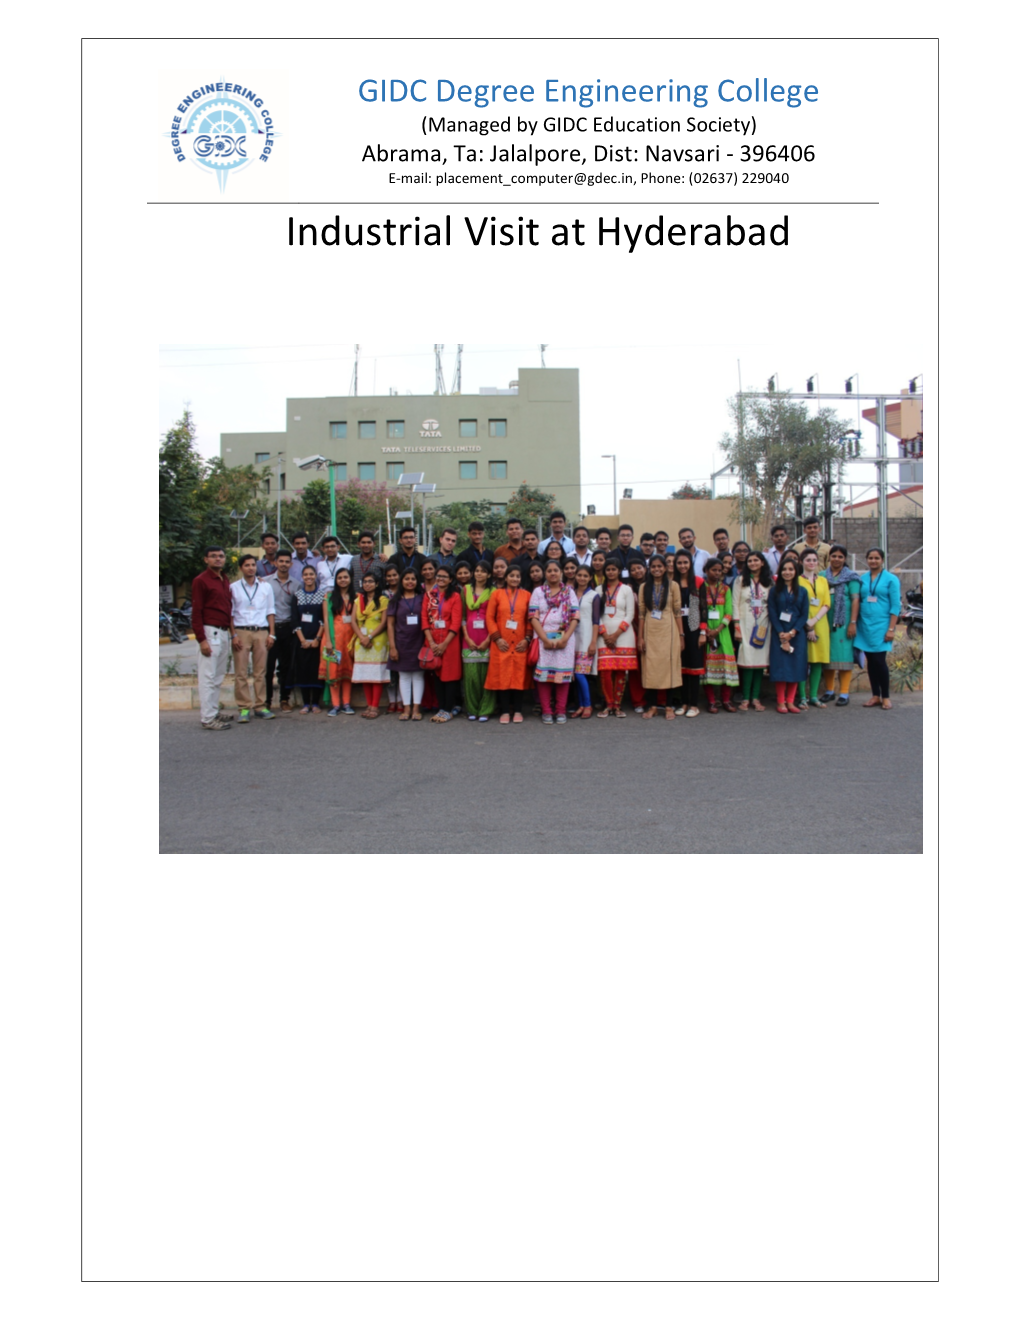 Industrial Visit at Hyderabad